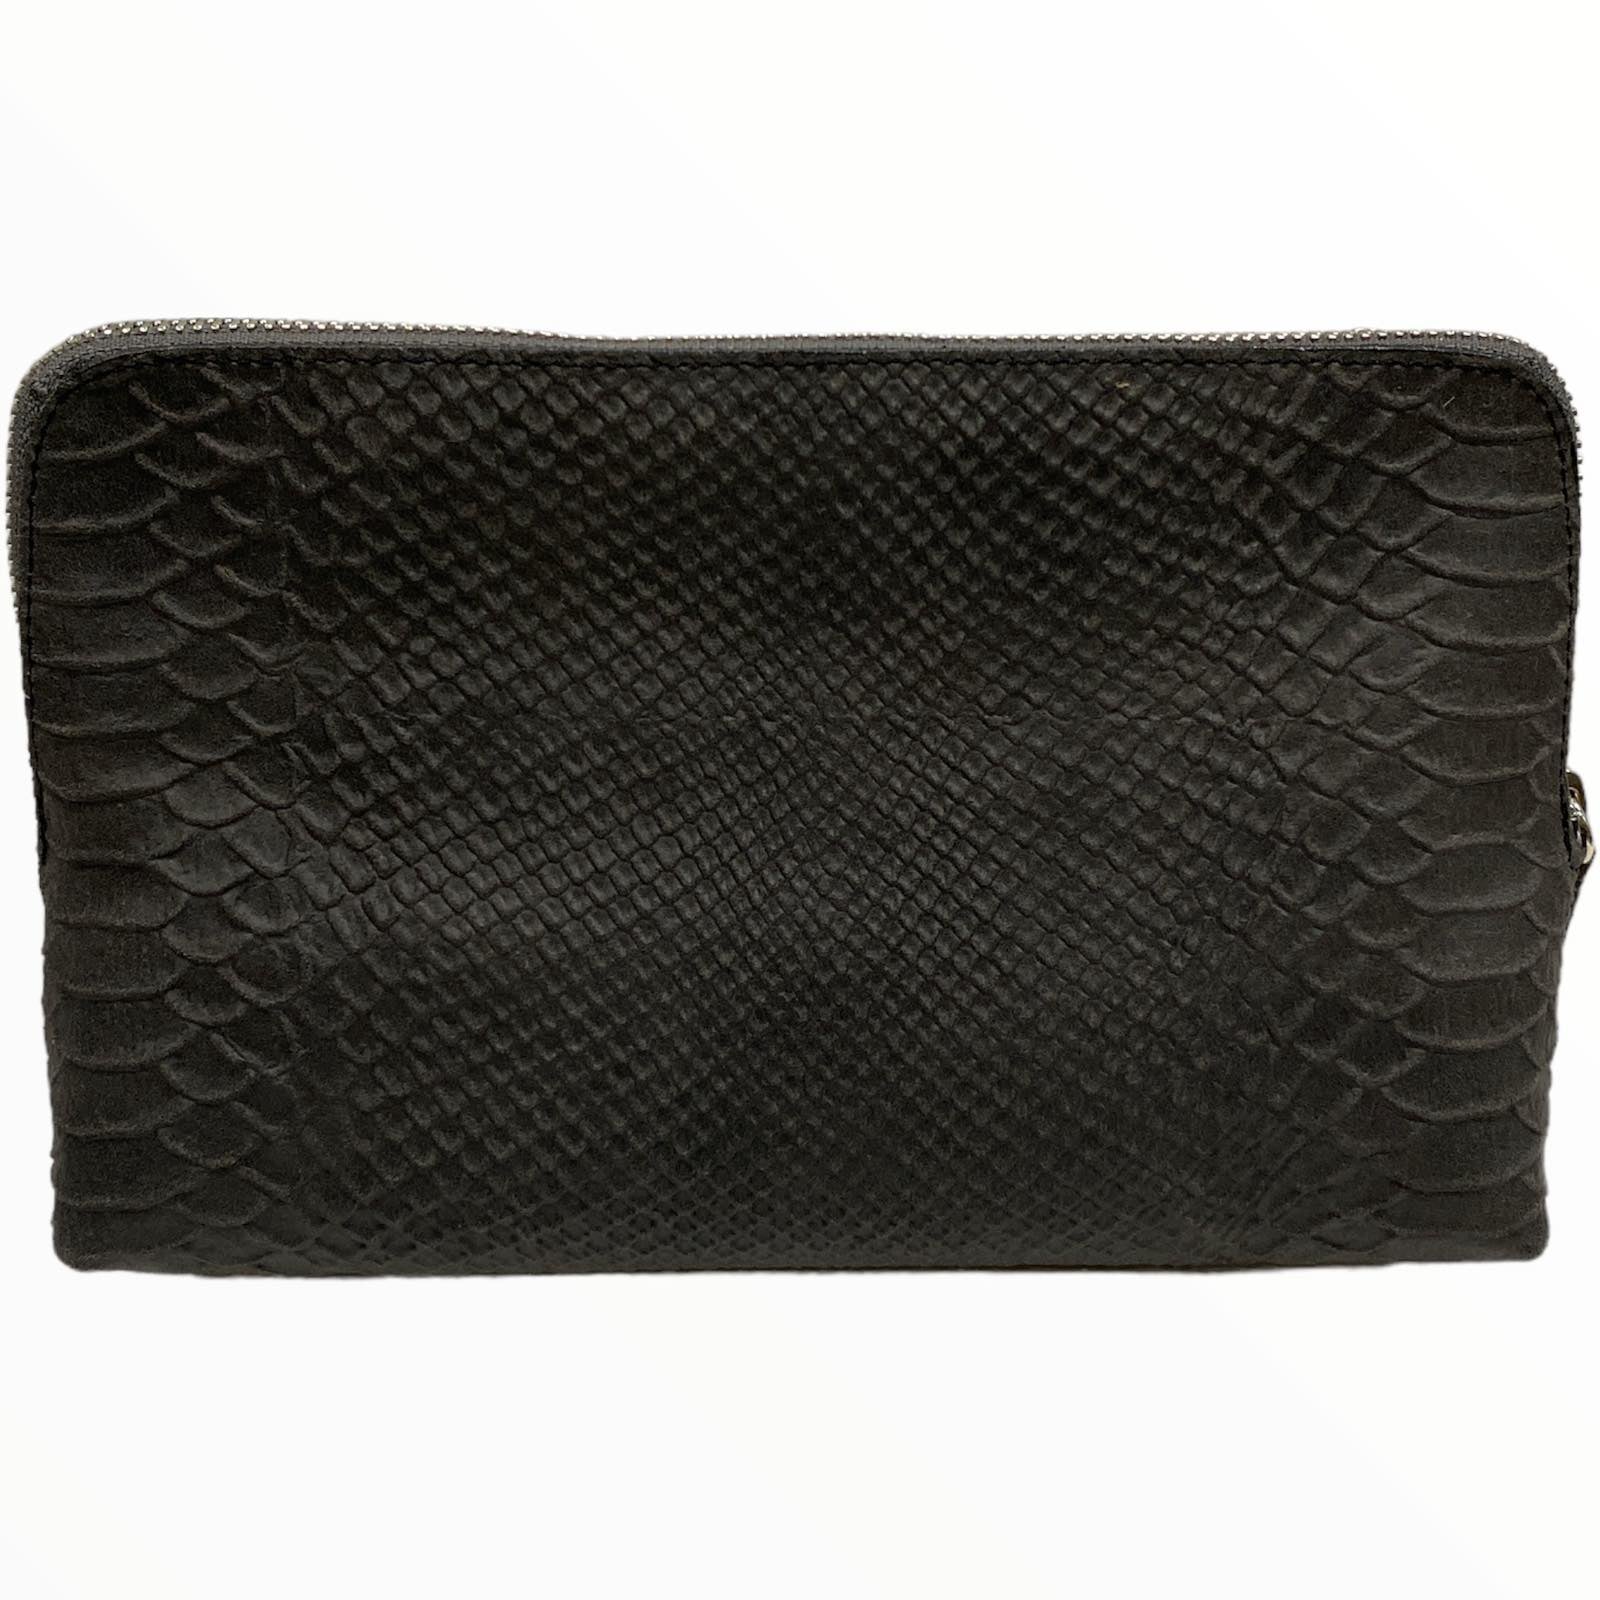 Box XL. Dark grey alligator-print leather messenger bag